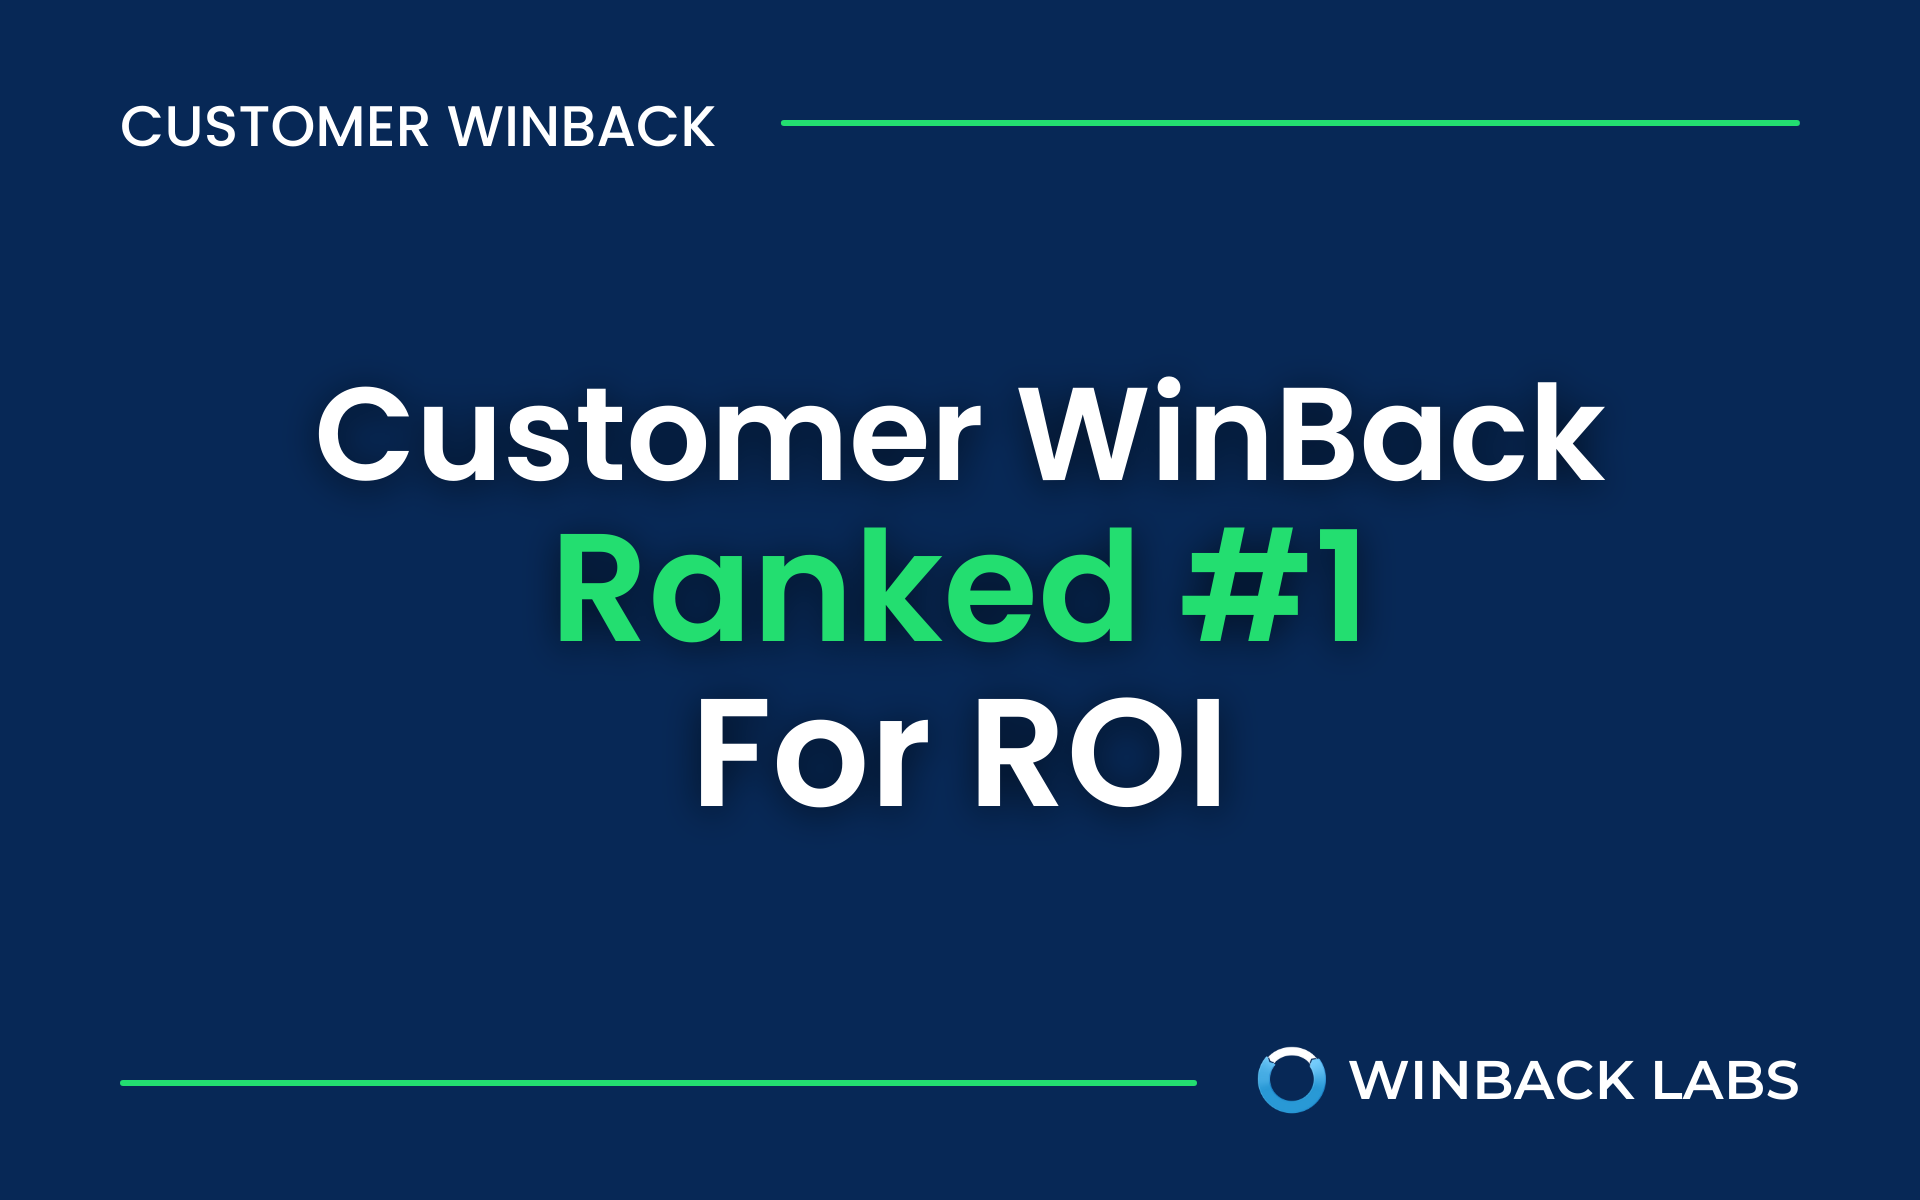 Customer WinBack Ranked #1 for ROI